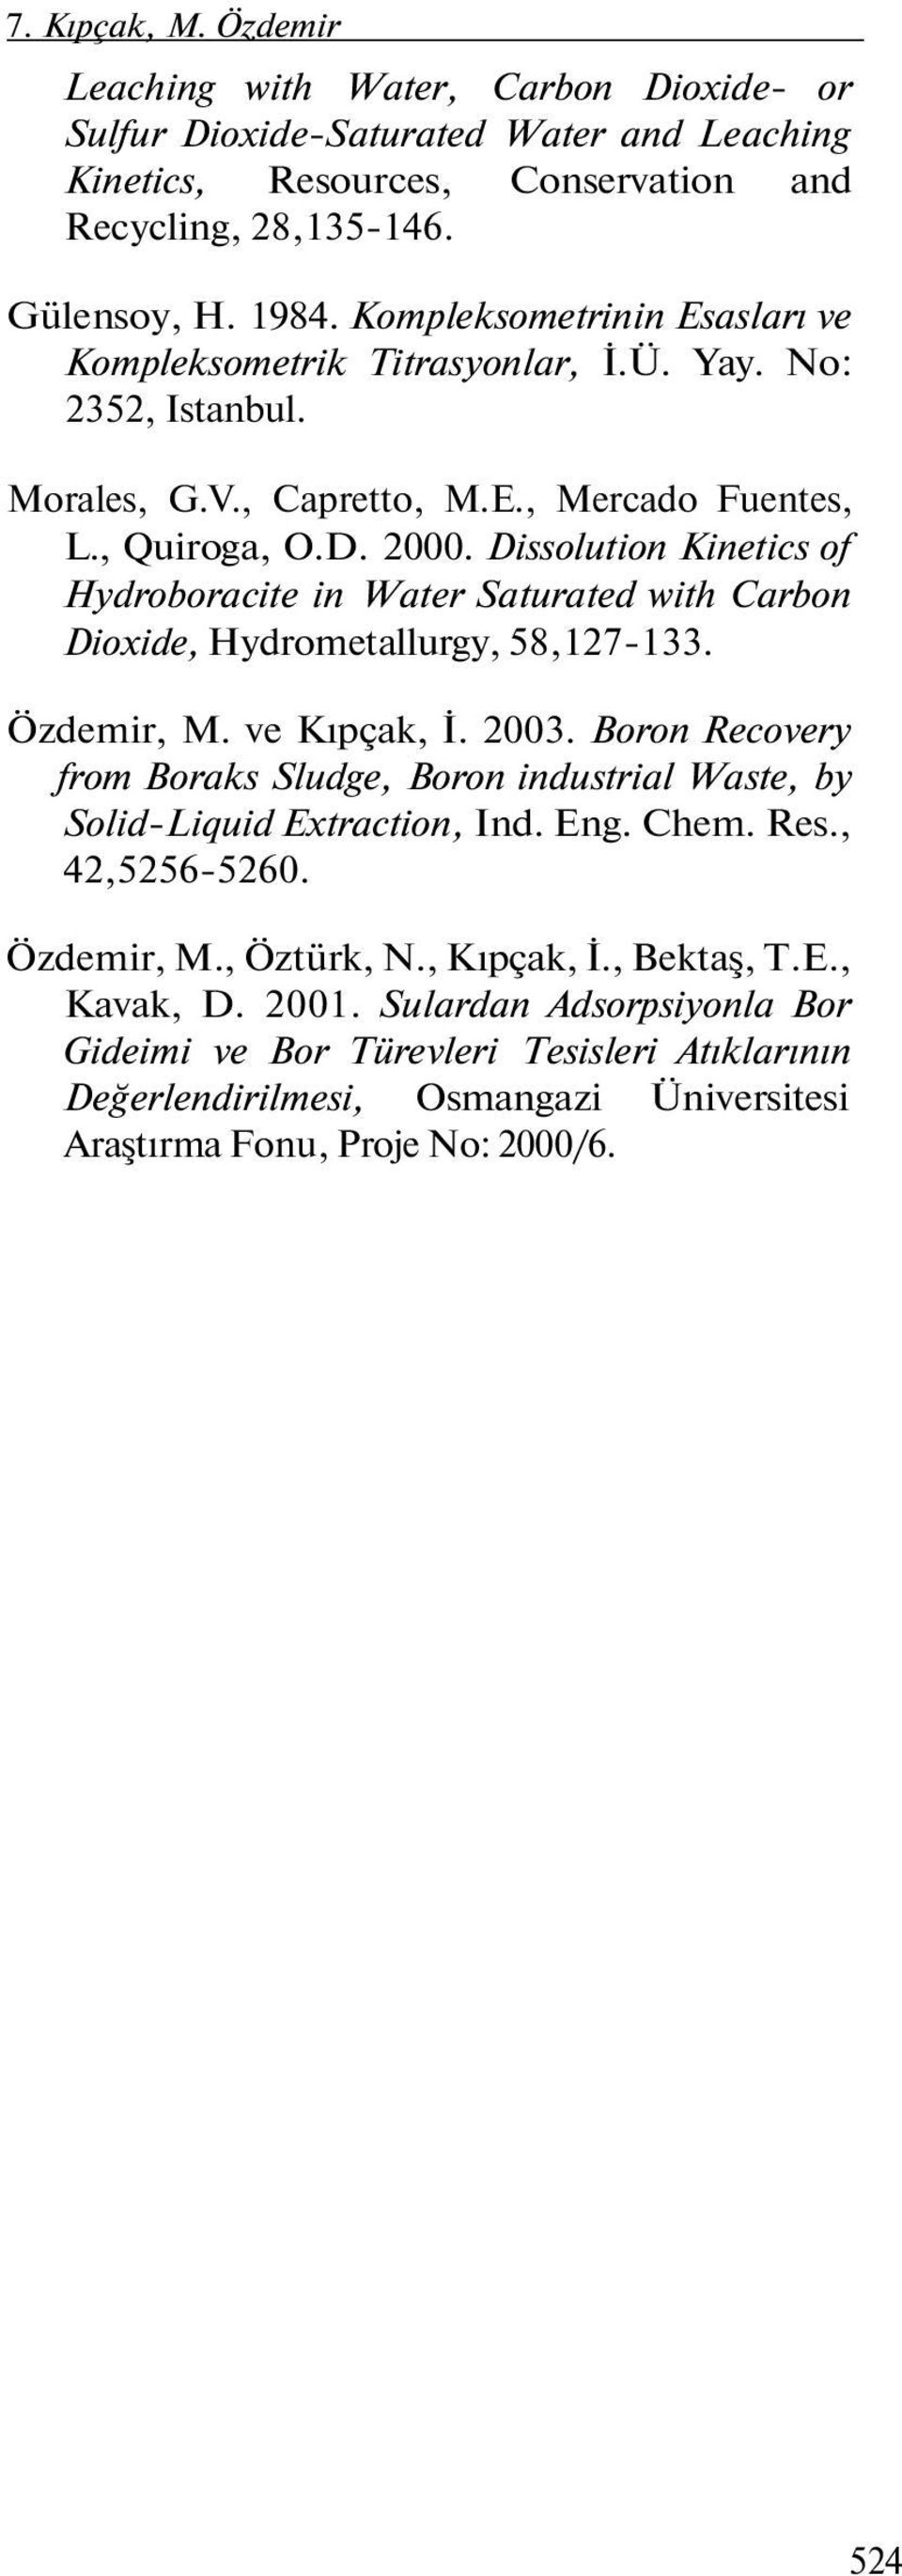 Dissolution Kinetics of Hydroboracite in Water Saturated with Carbon Dioxide, Hydrometallurgy, 58,127-133. Özdemir, M. ve Kıpçak, İ. 2003.